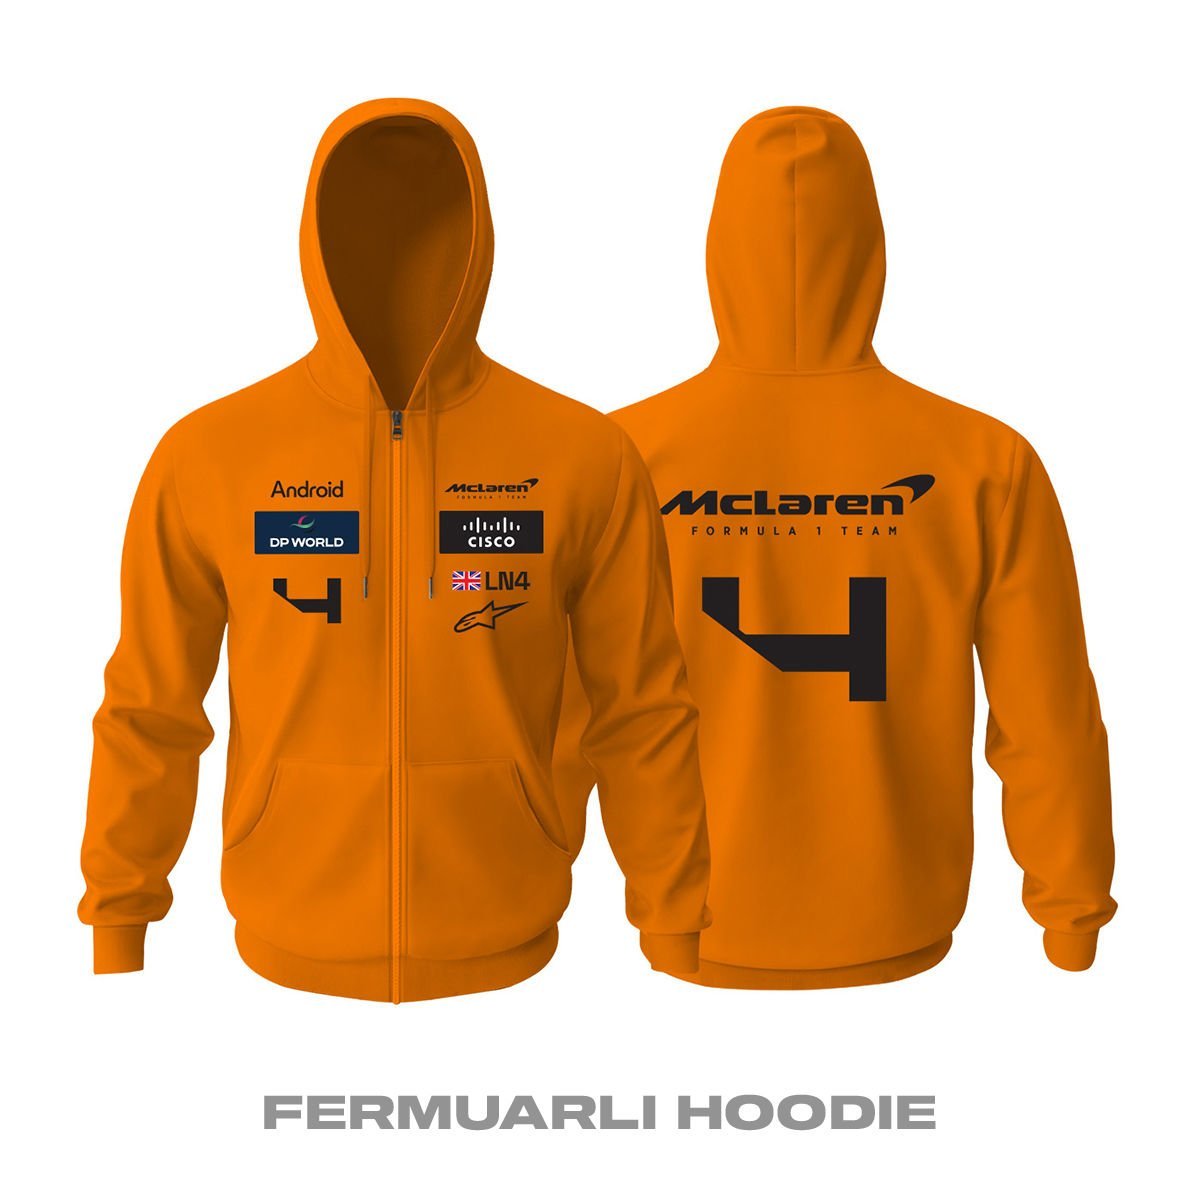 McLaren F1 Team: MCL38 Edition Fermuarlı Hoodie